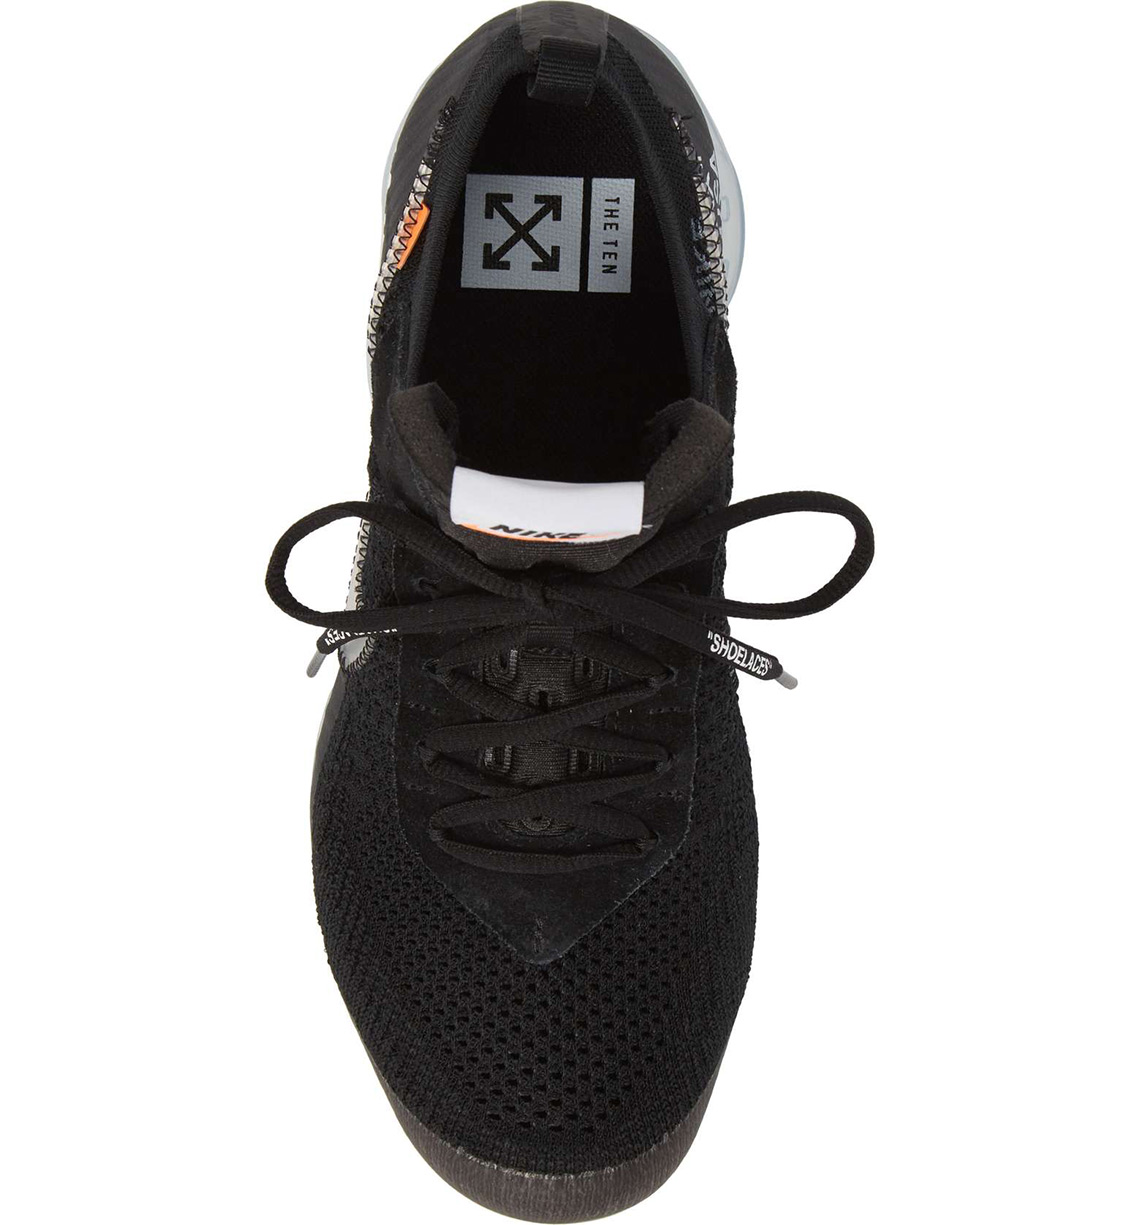 Off White Nike Vapormax Flyknit Black Release Info 7